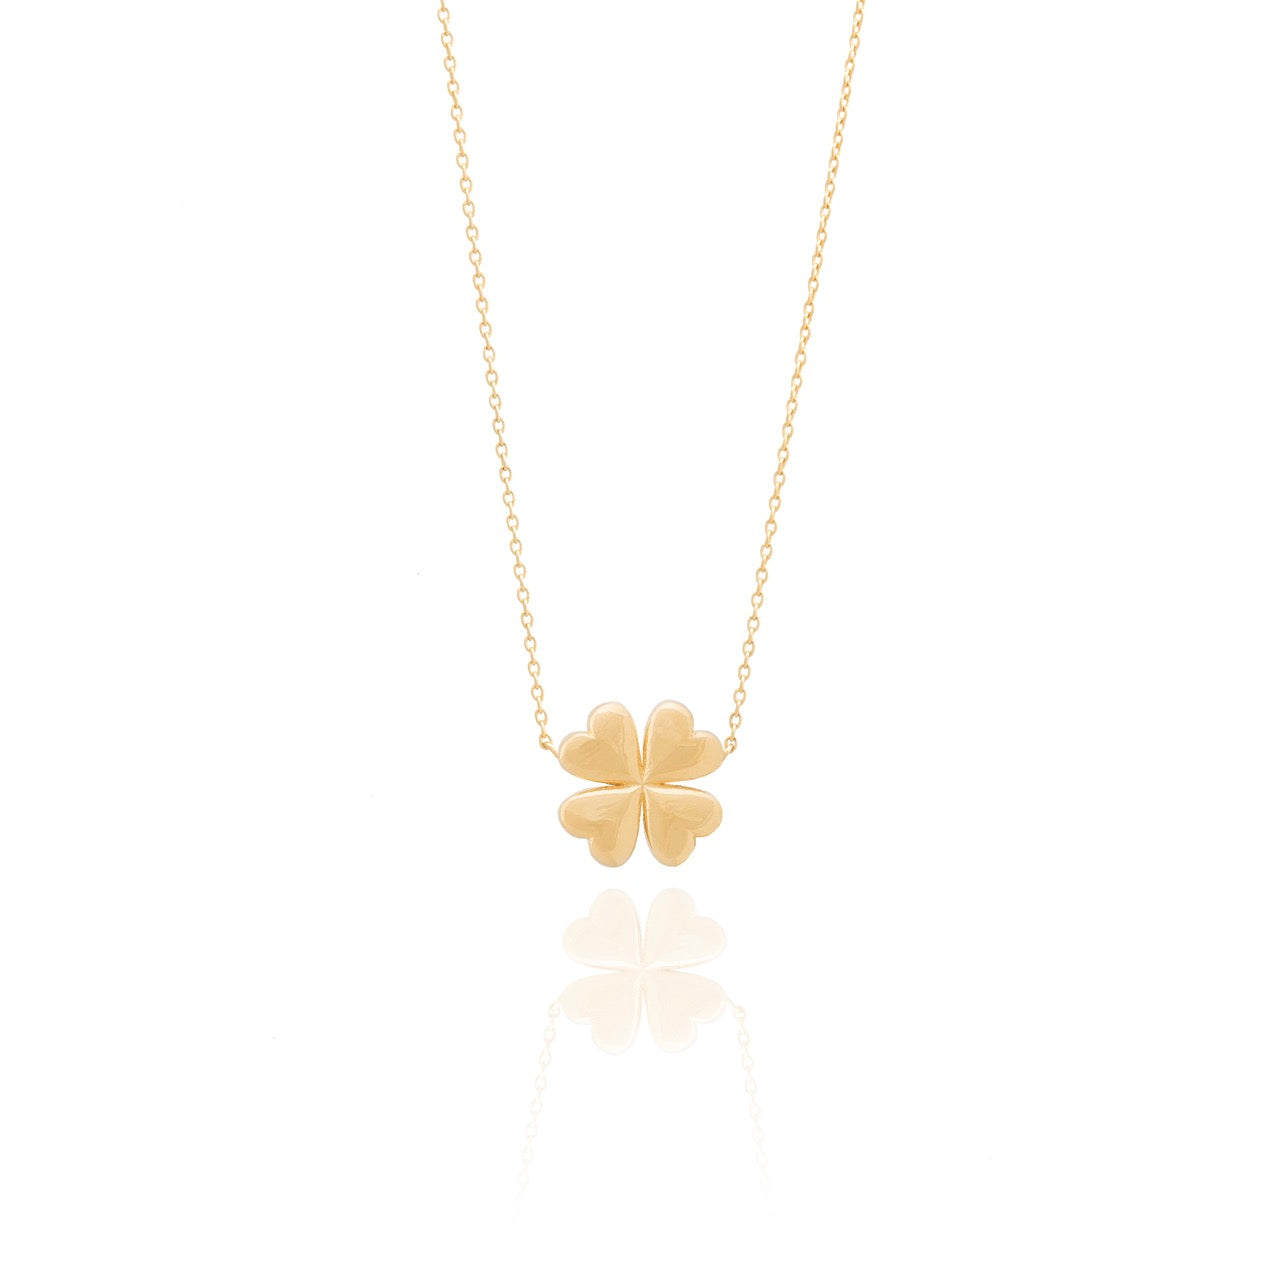 18K Gold Vermeil Clover Leaf Necklace - INES SANTOS JEWELLERY